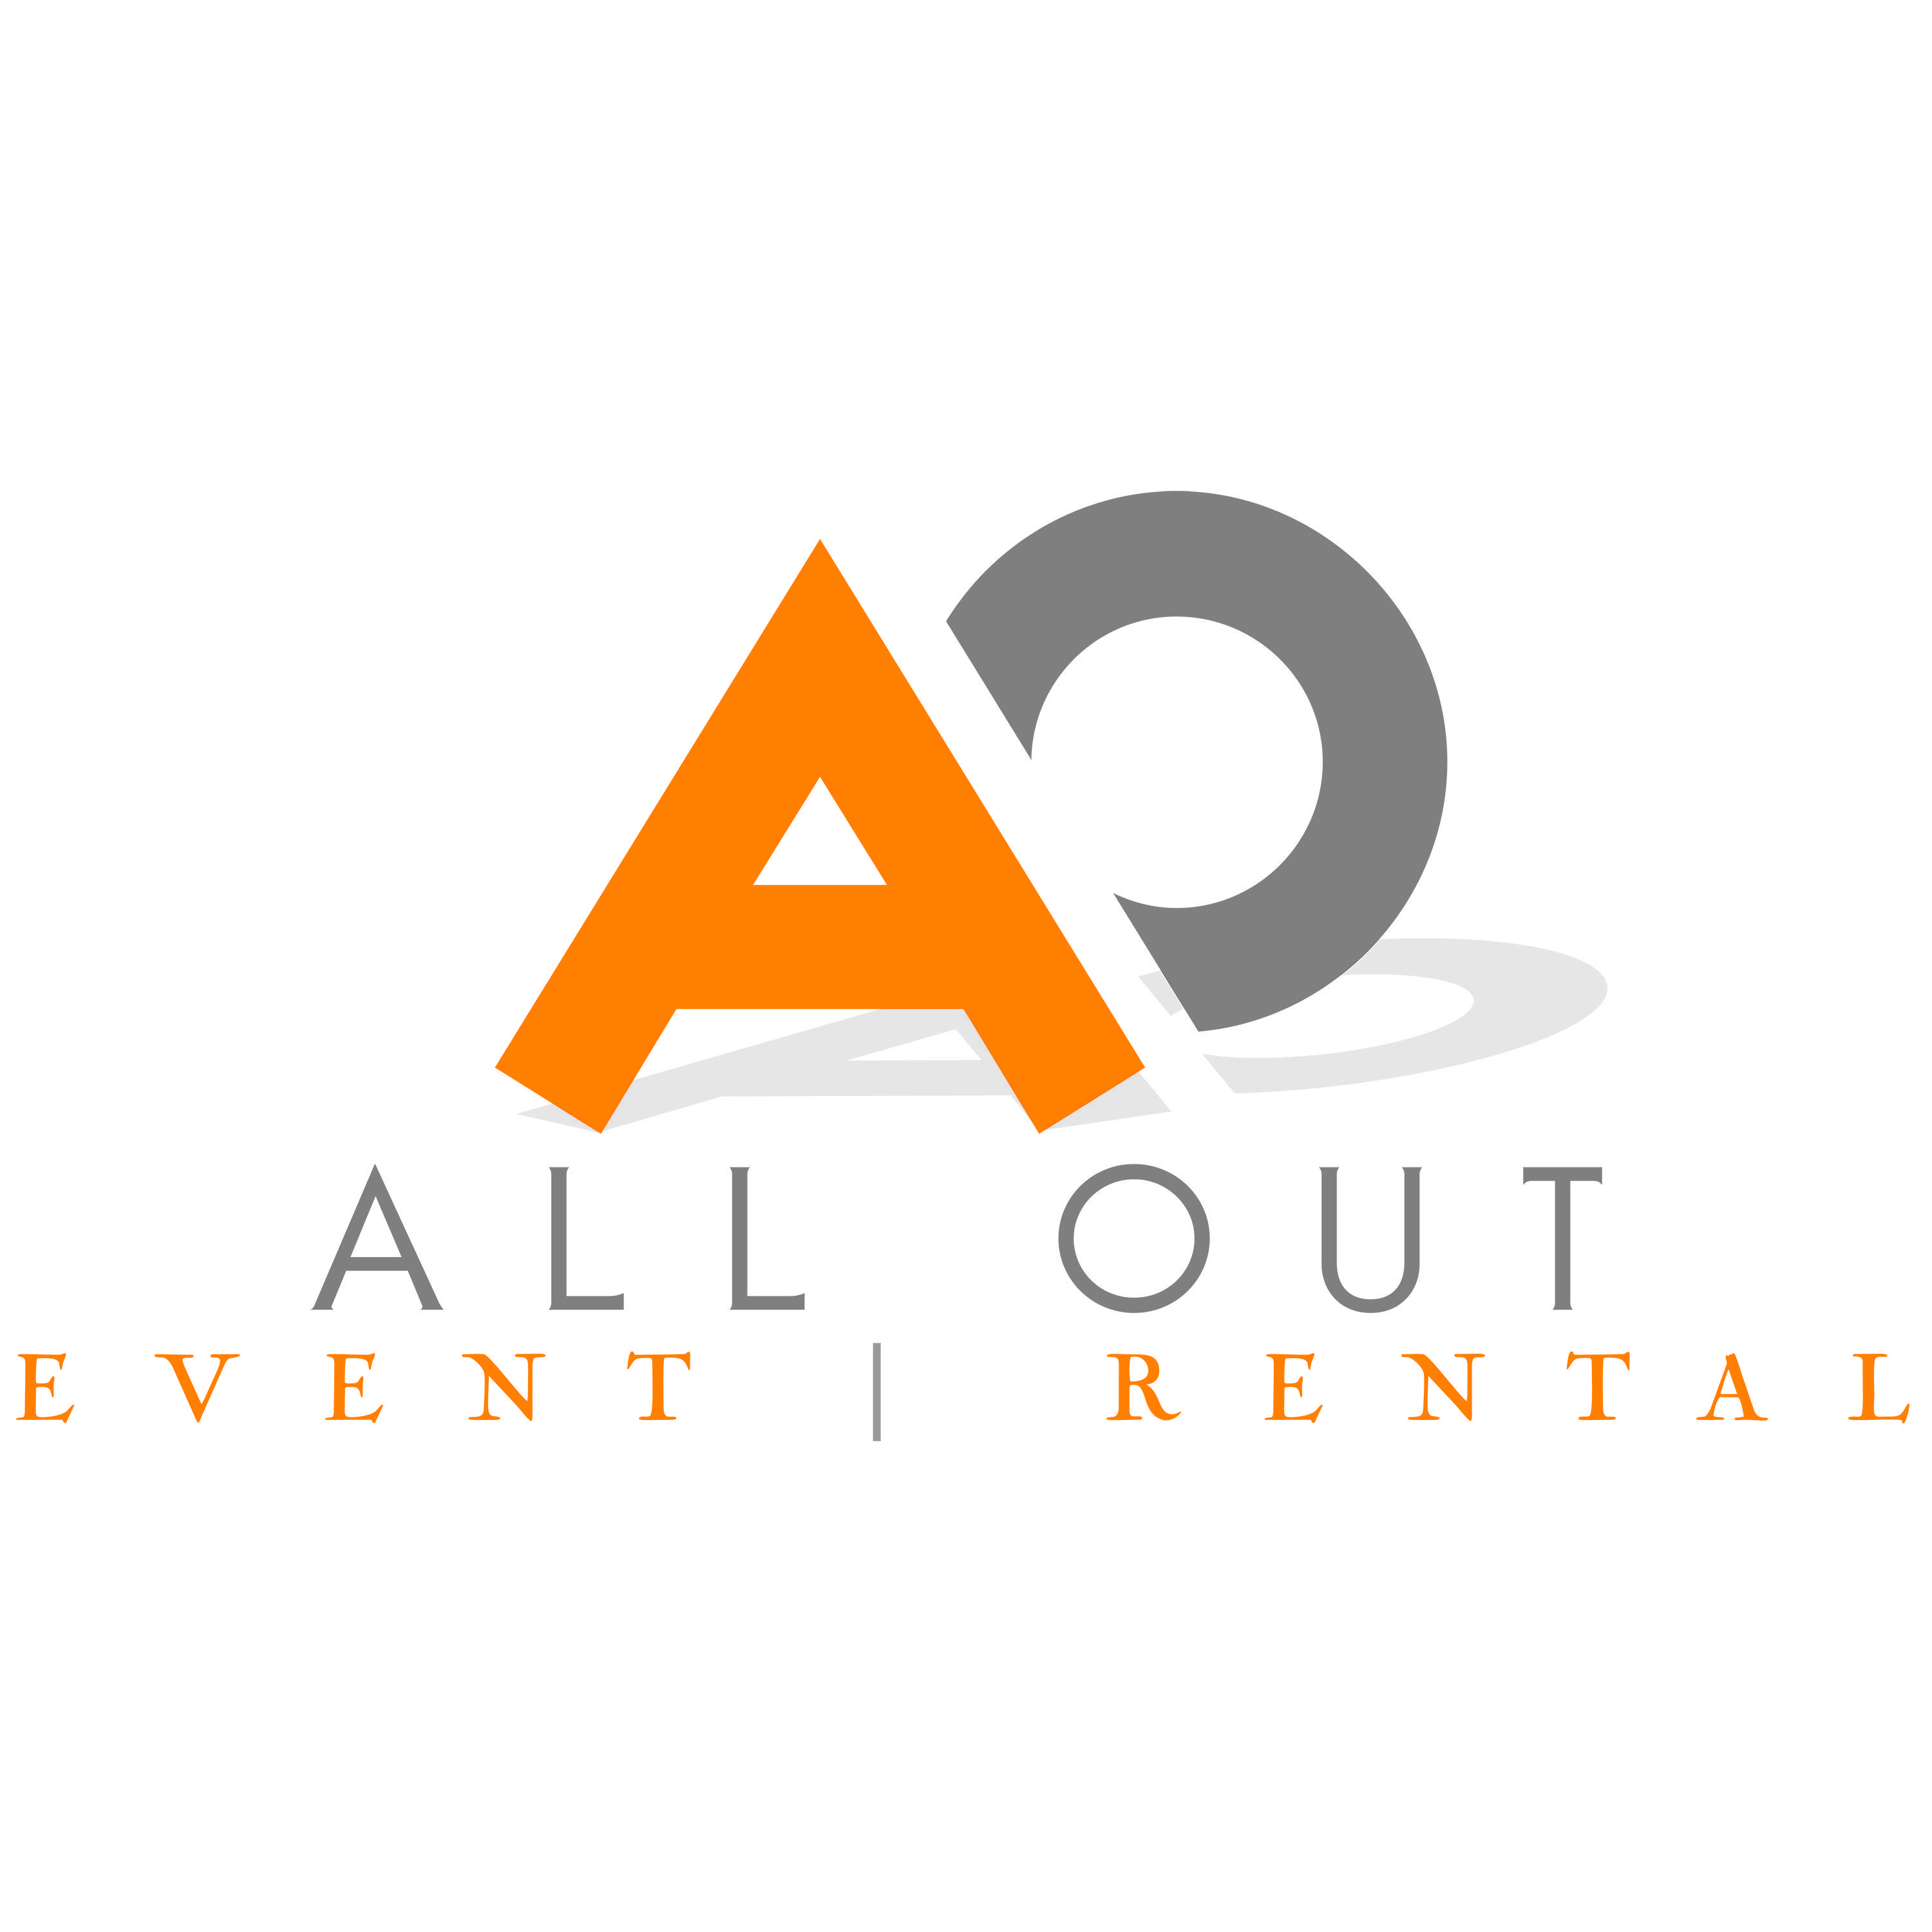 Rental Logo - AO Event Rental Logo FINAL. All Out Event Rental